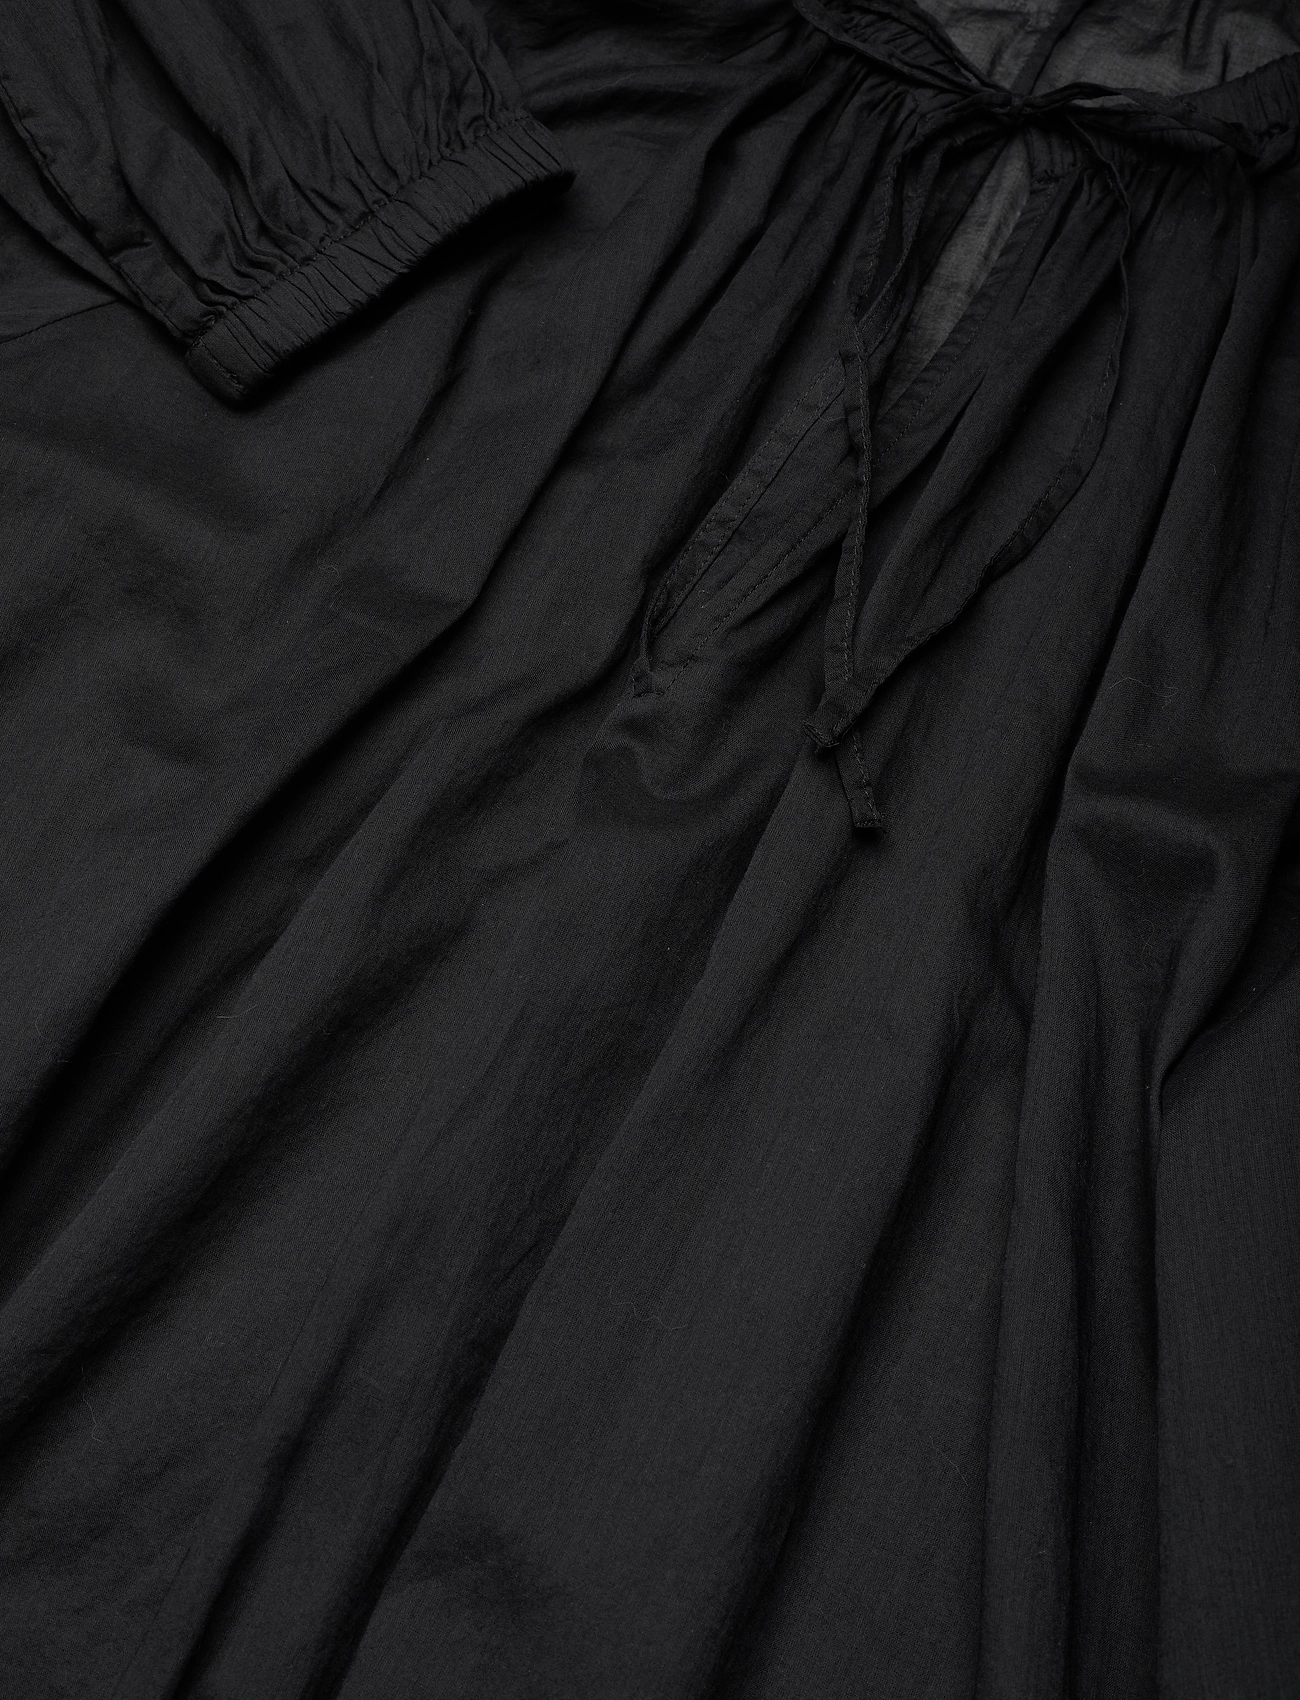 Closed - tunic maxi dress - robes de soirée - black - 6